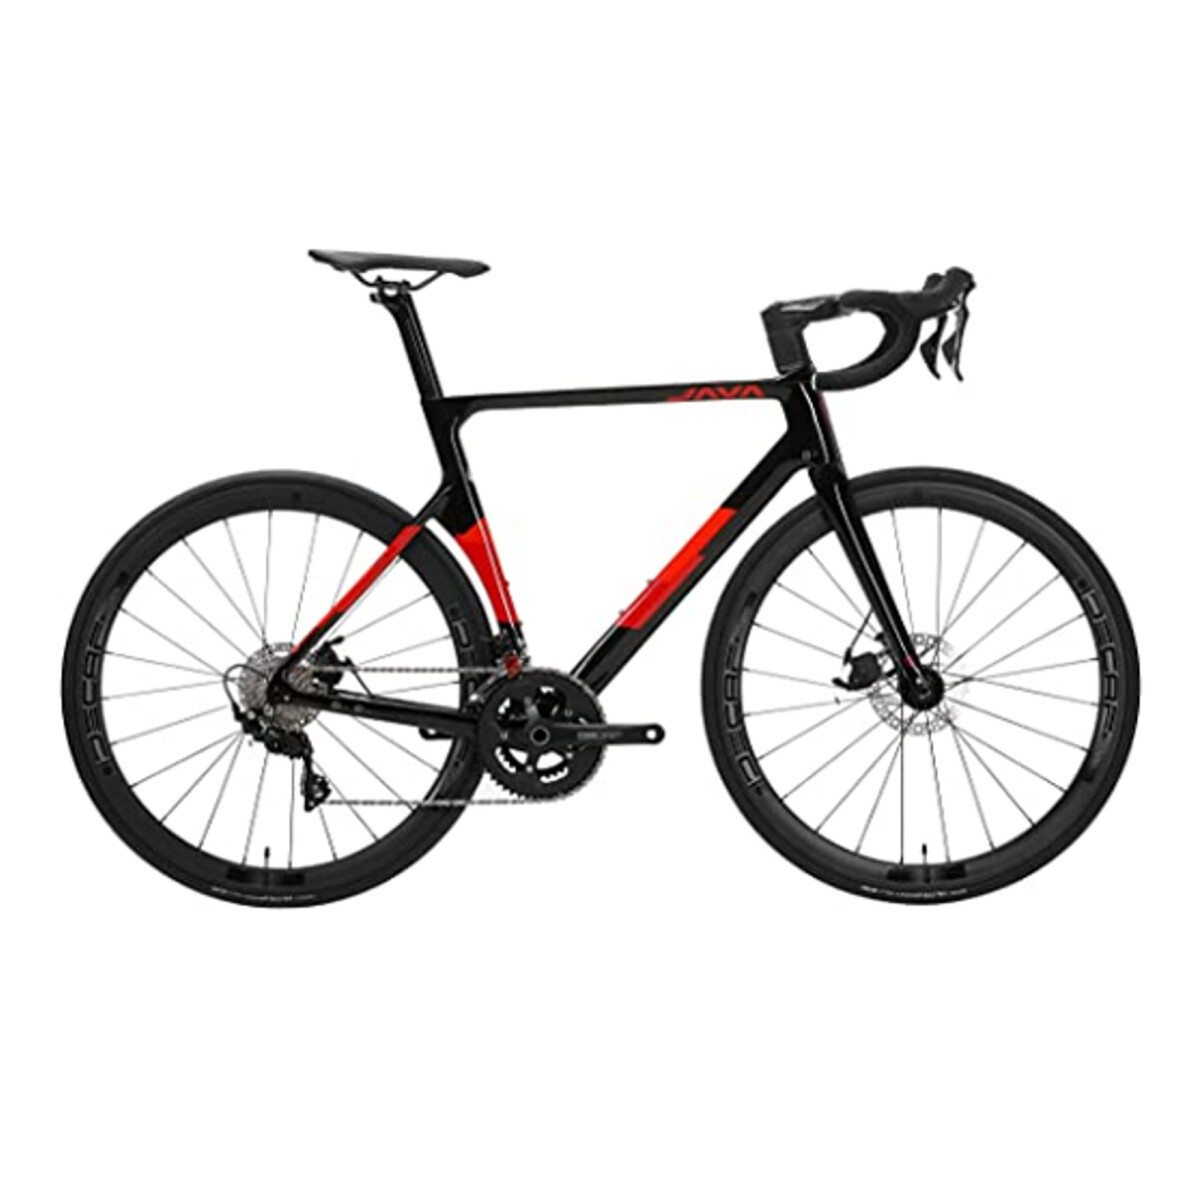 Java - Bicicleta de Ruta Vesuvio - 700C. 22 Velocidades, Talle 57. Color Negro / Rojo. - 001 